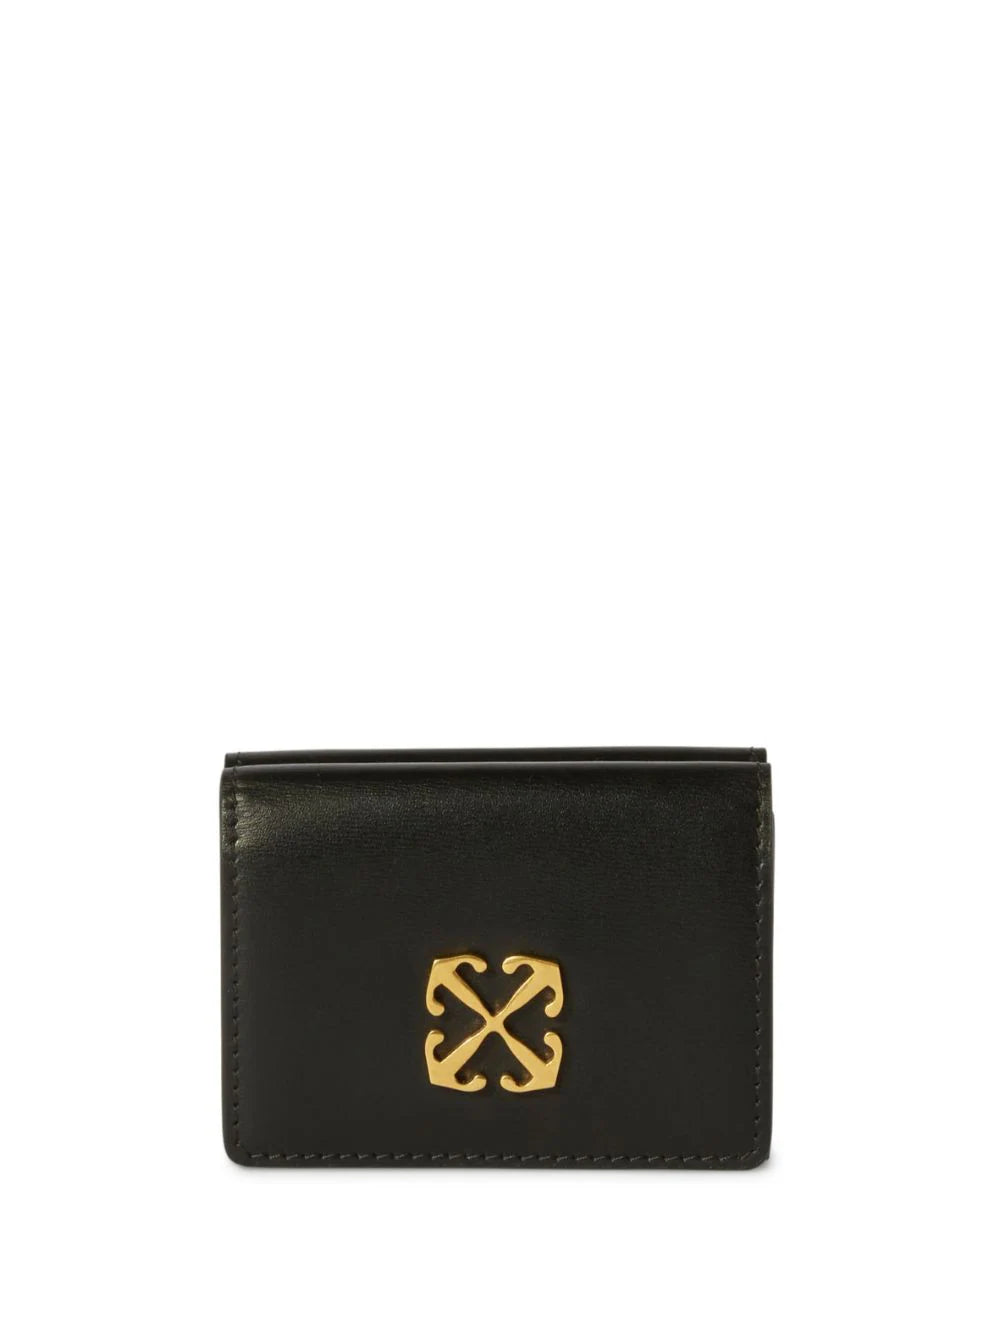 OFF-WHITE WOMEN Jitney Mini Compact Wallet Black/Gold - MAISONDEFASHION.COM